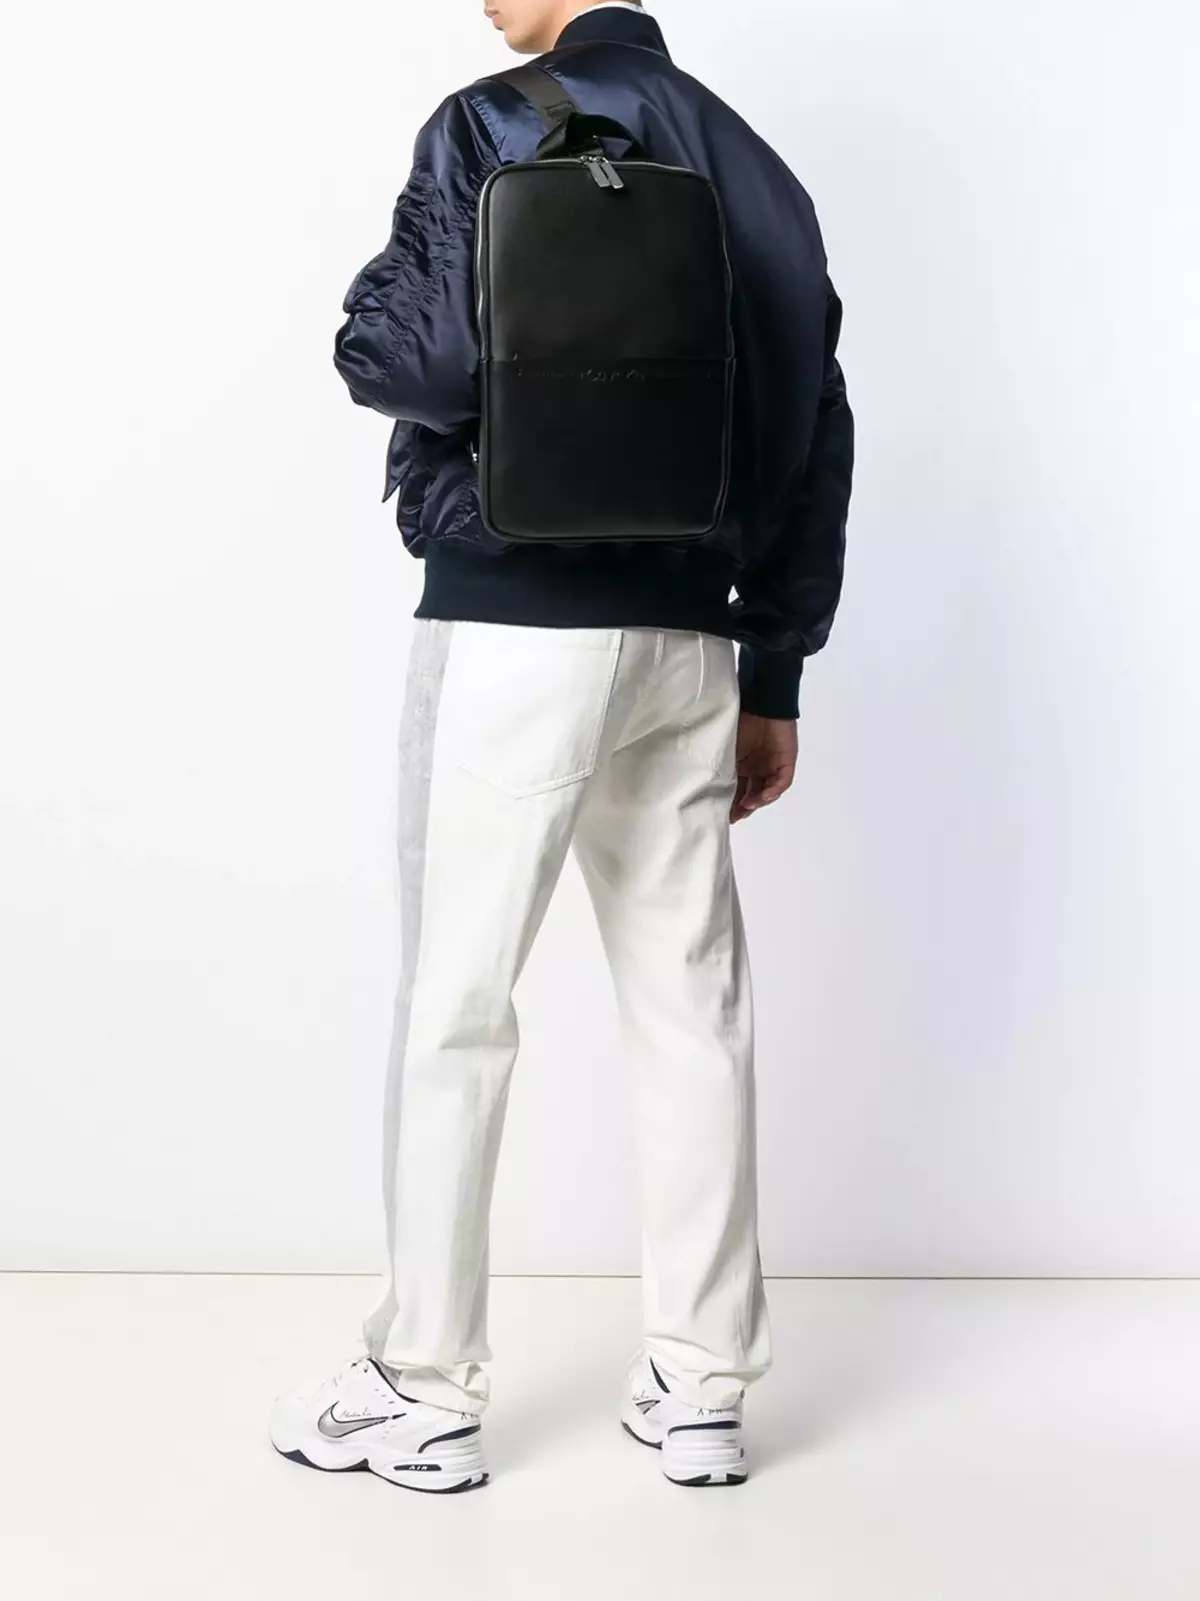 Calvin Klein Backpacks: Black Kike na Mwanaume, Leather Red, White, Yellow Kwa Monogramm na Rangi nyingine Mifuko - Backpacks 15401_41